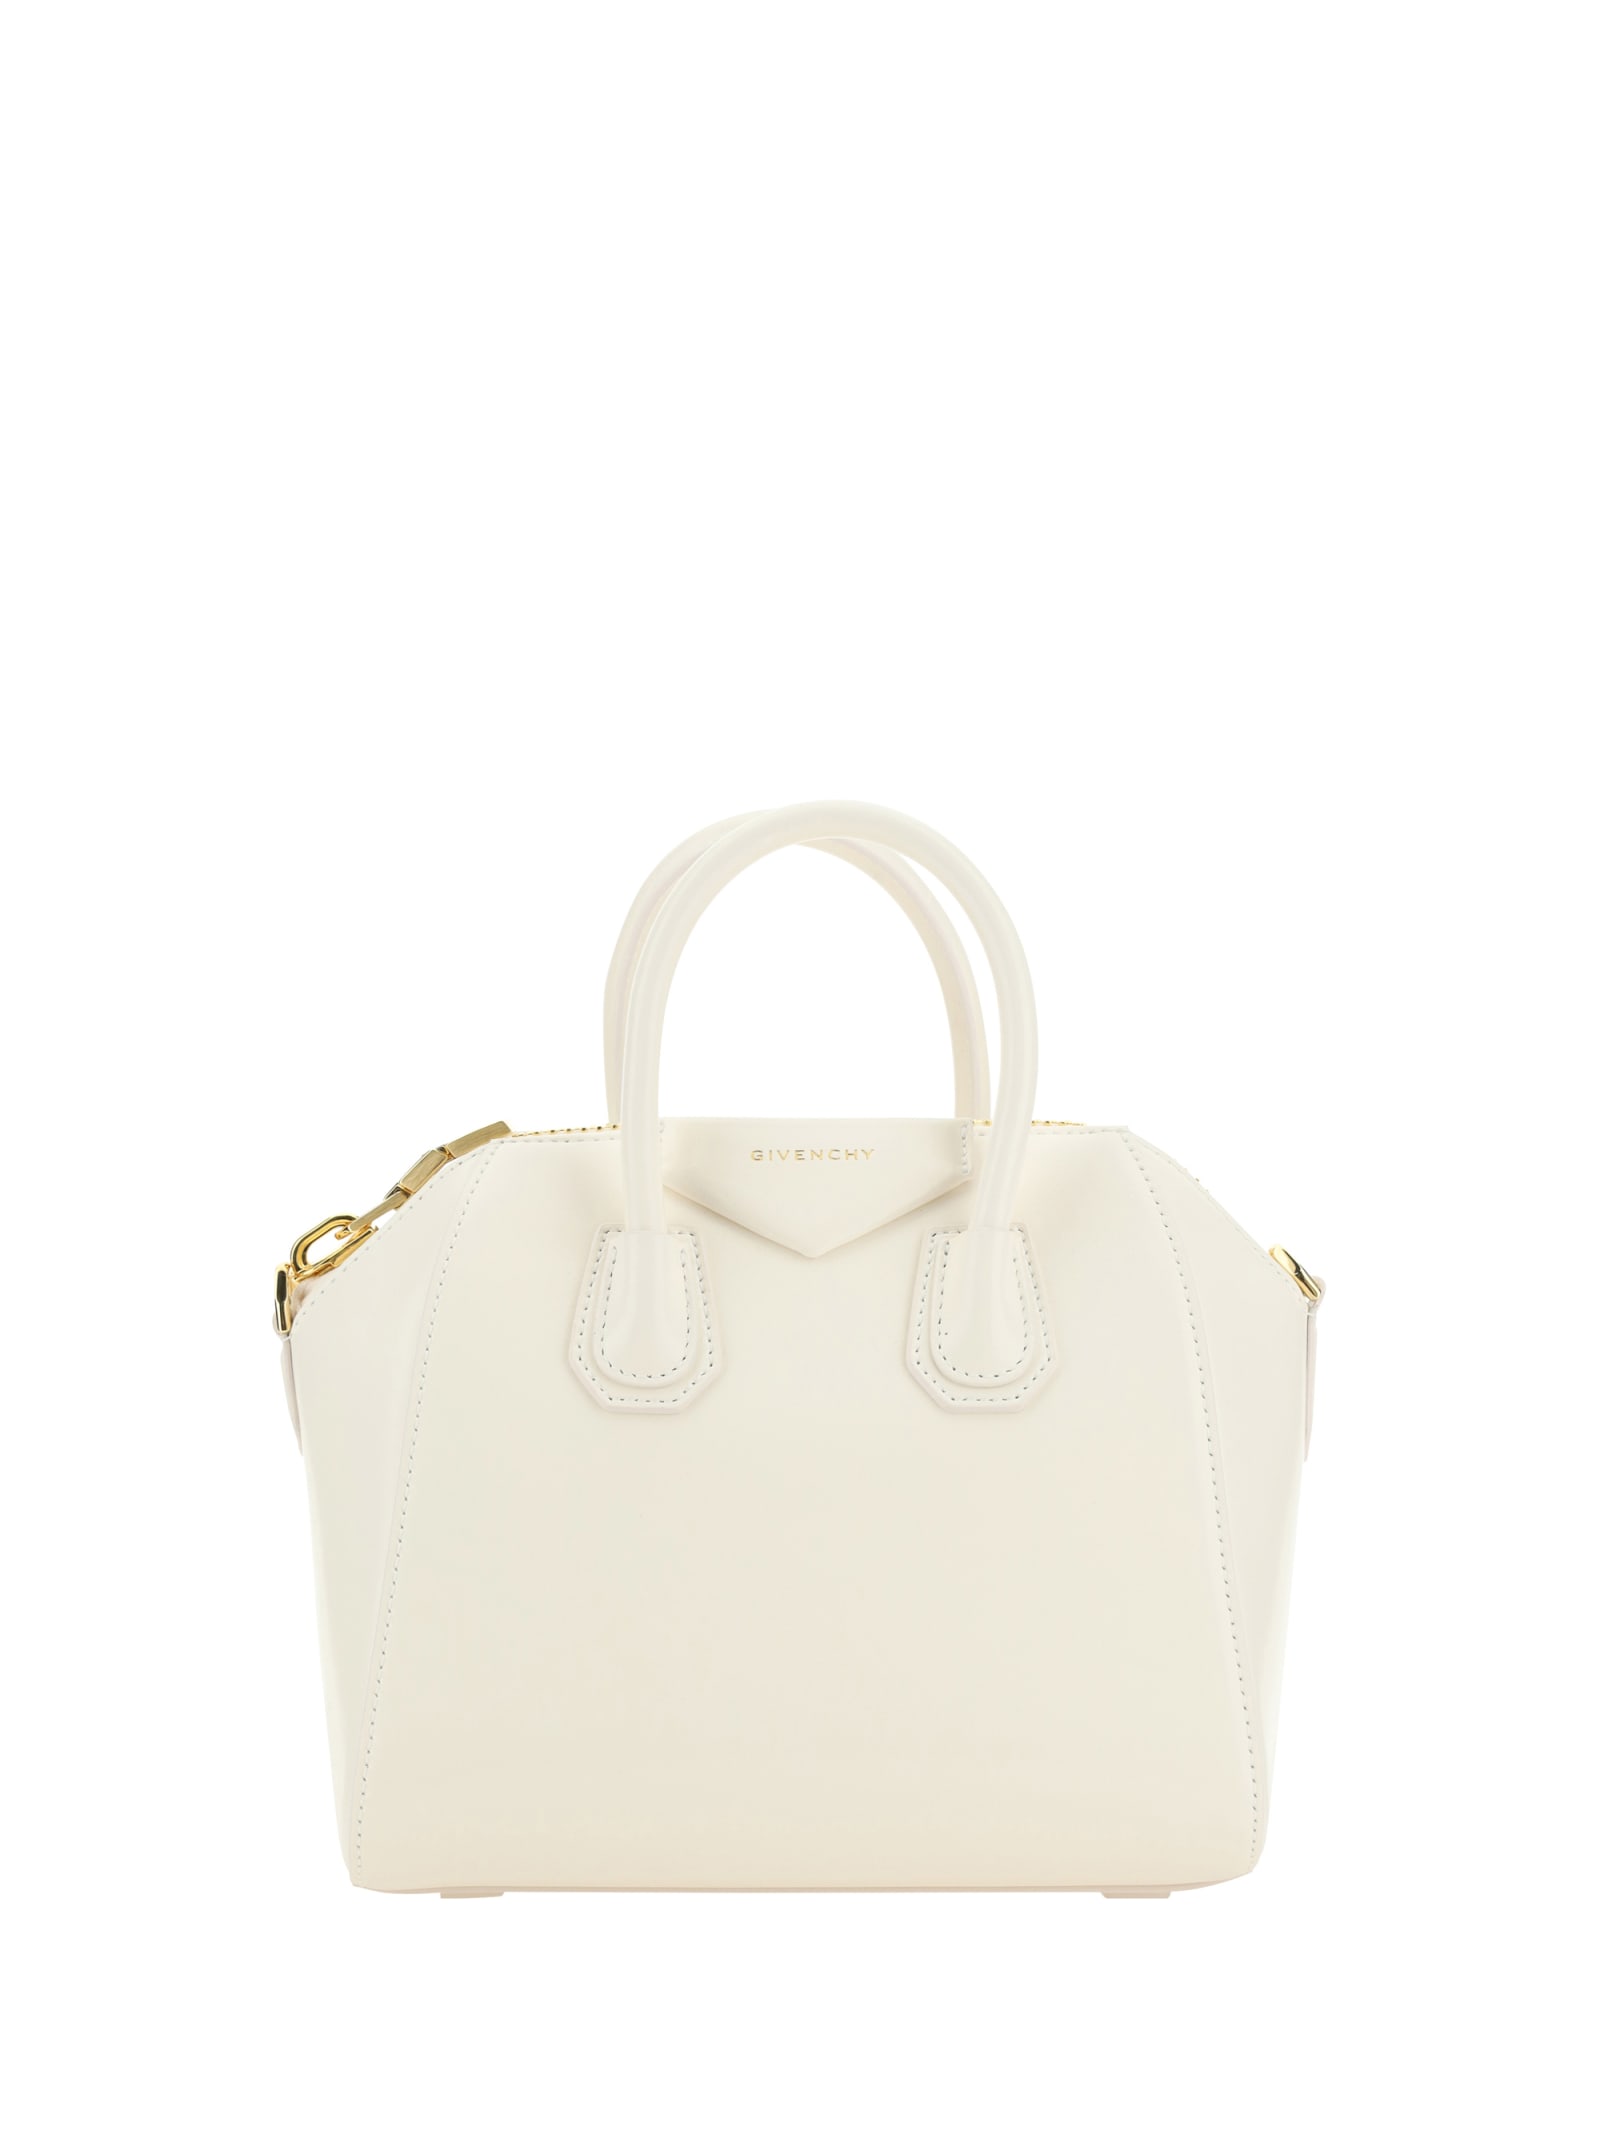 Givenchy Mini Antigona Handbag In Bianco